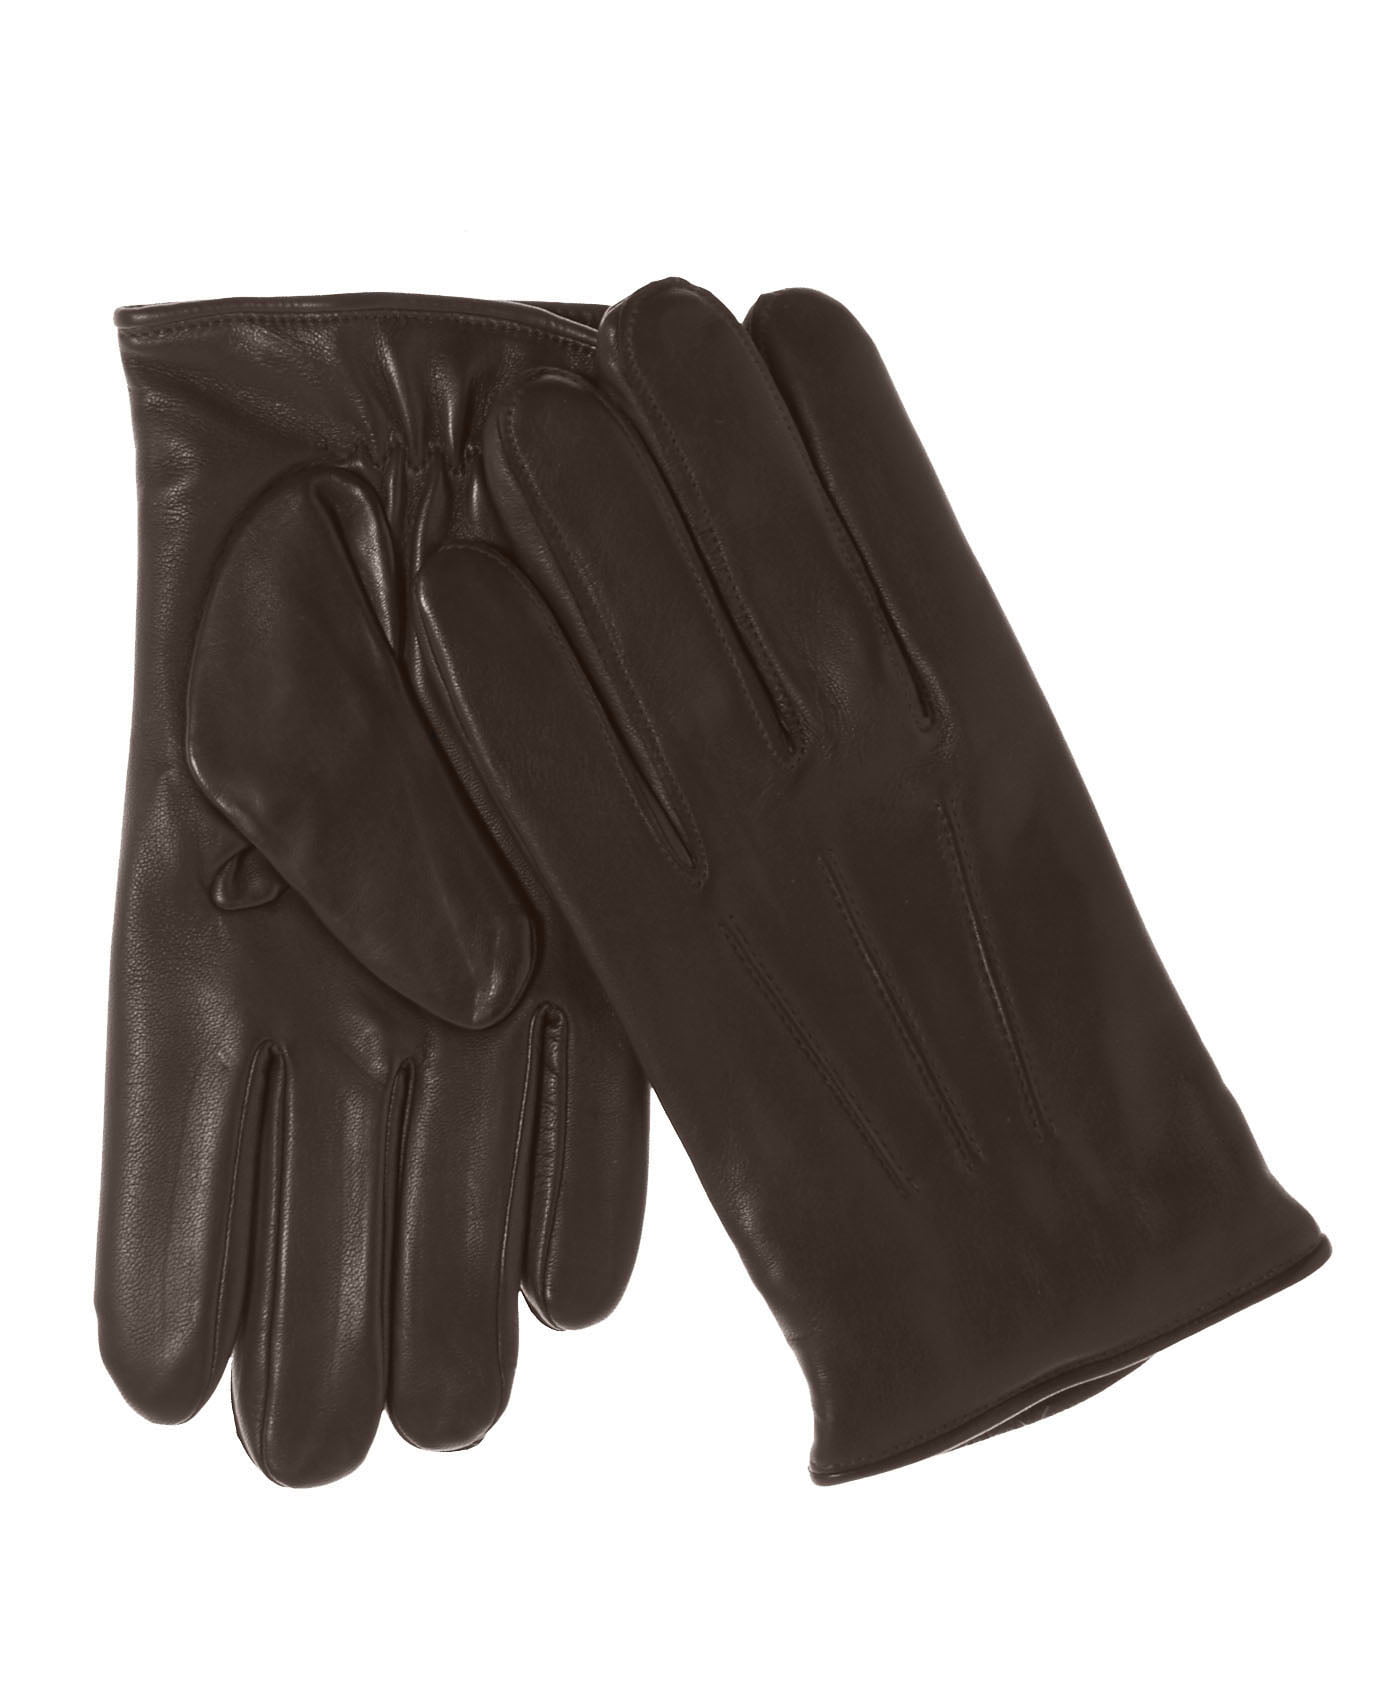 soft lambskin leather gloves black brown premium italian leather 